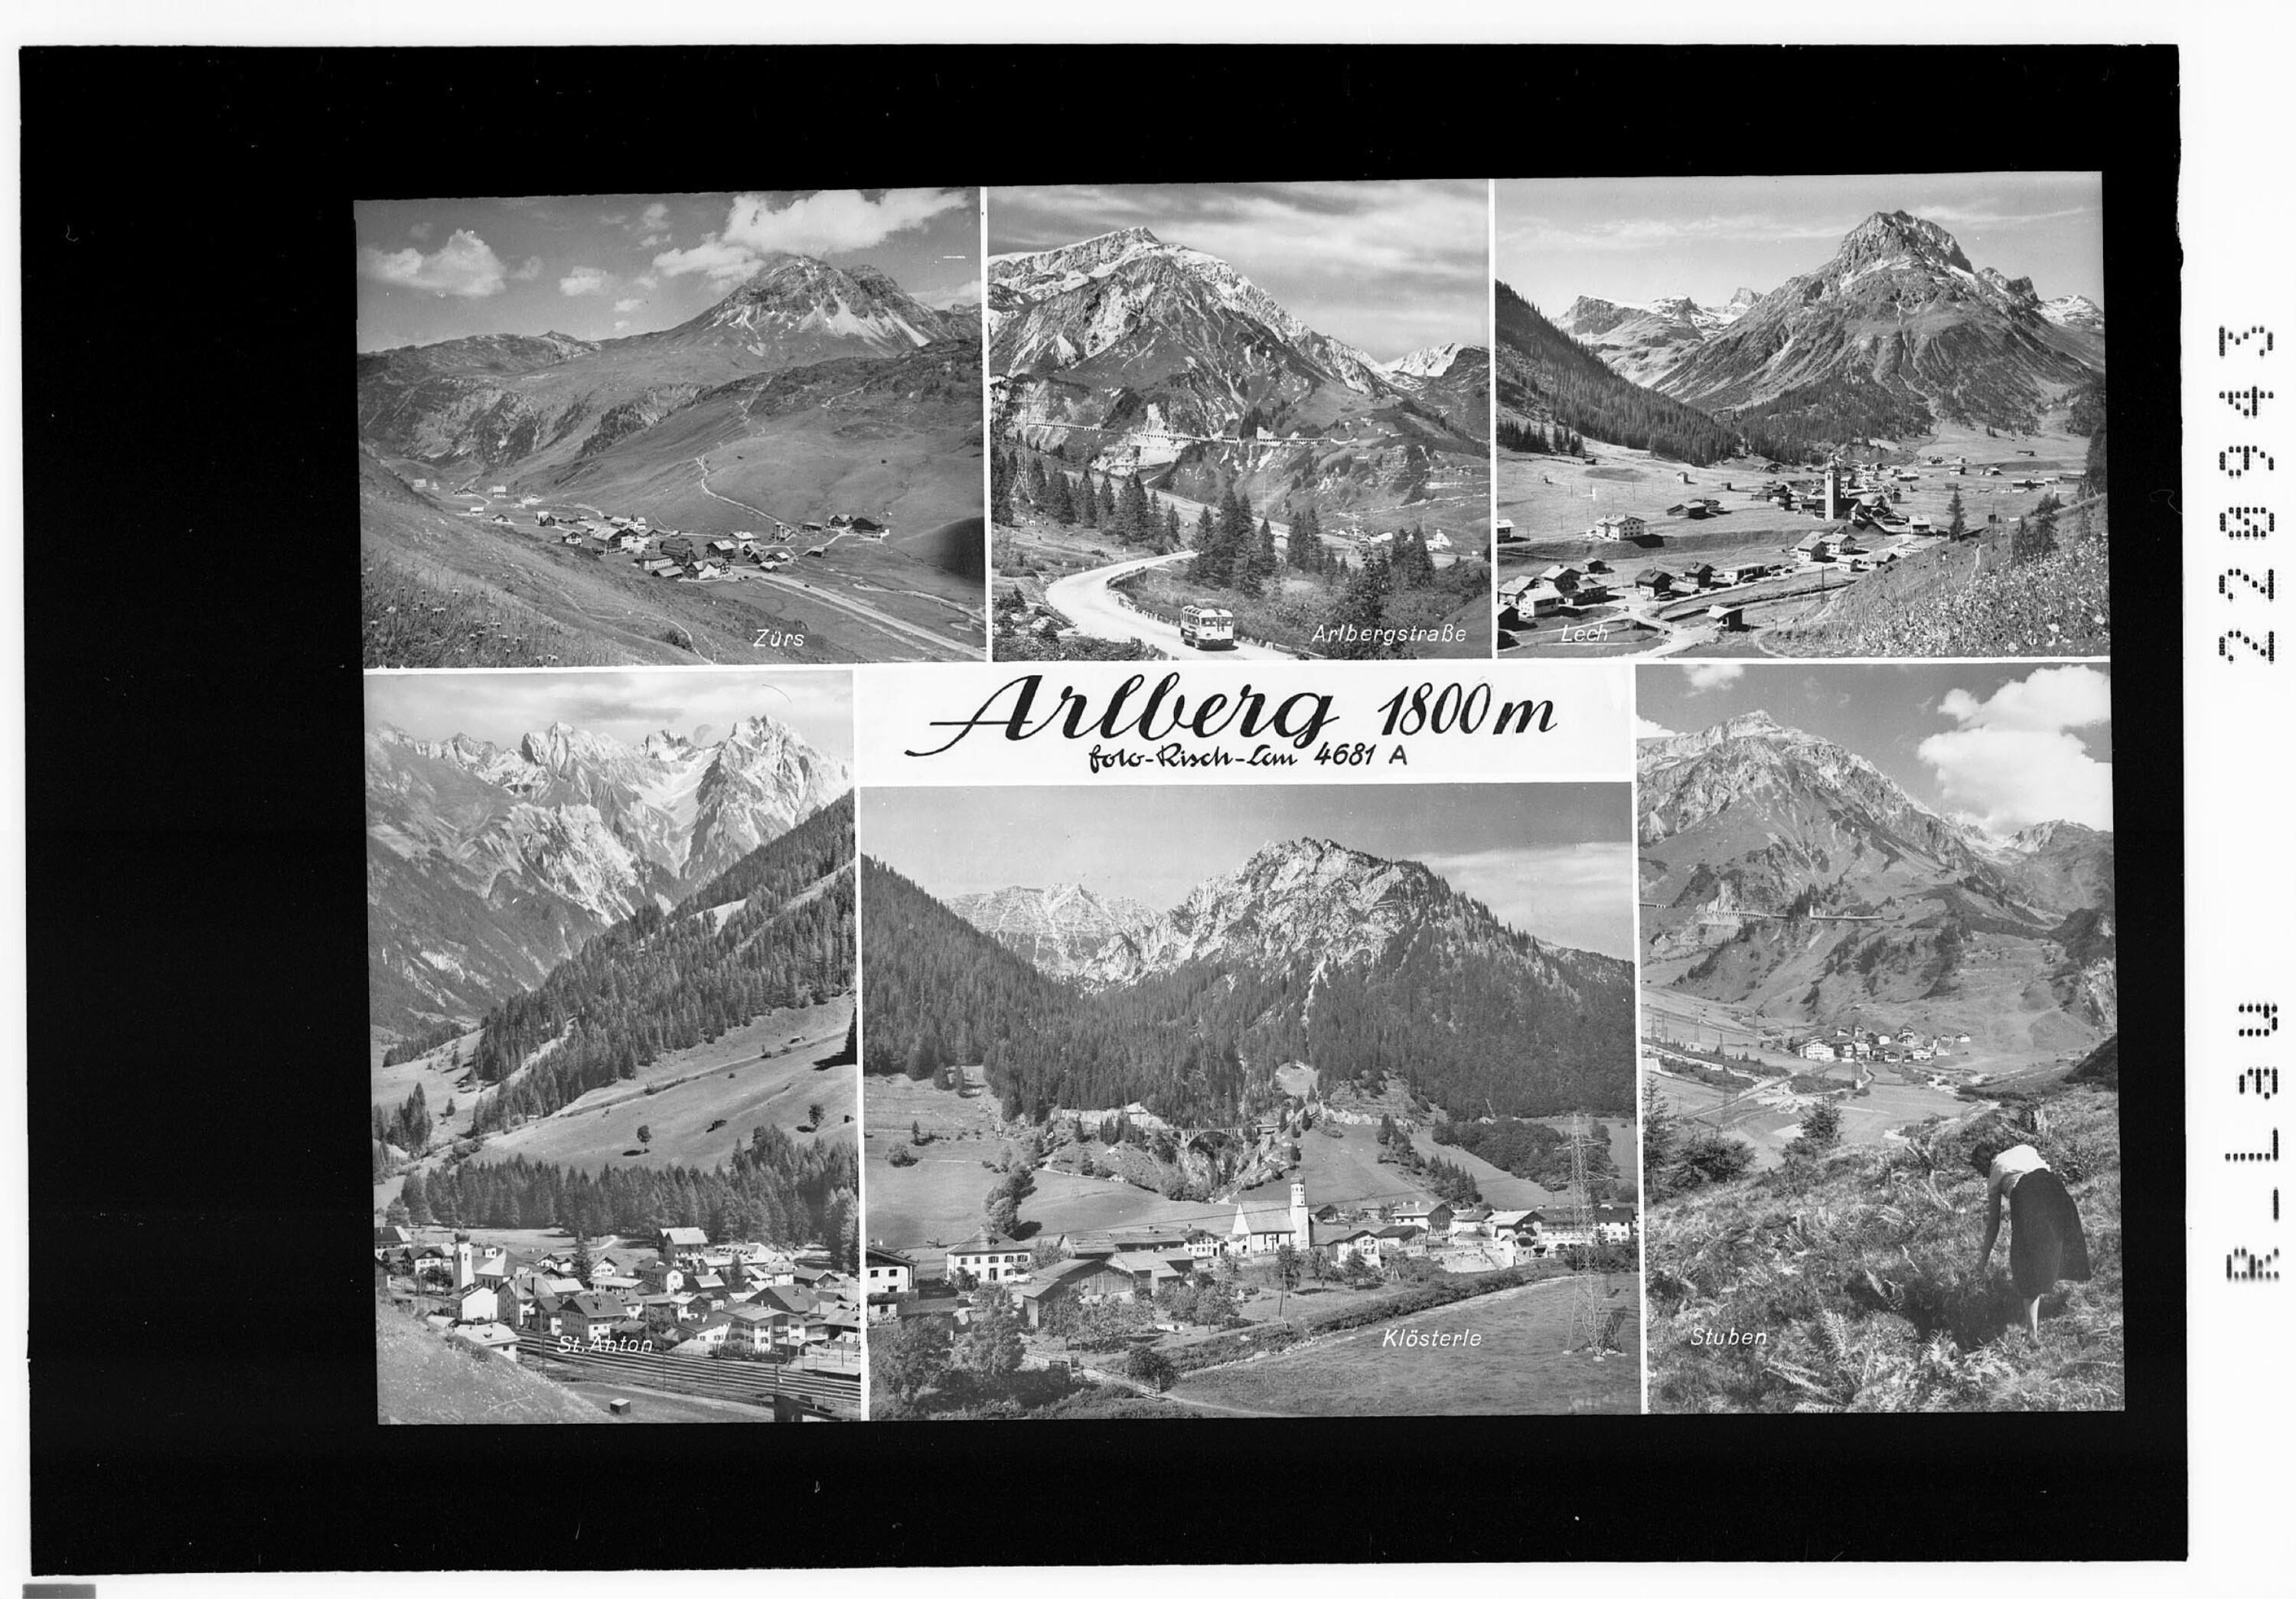 Arlberg 1800 m></div>


    <hr>
    <div class=